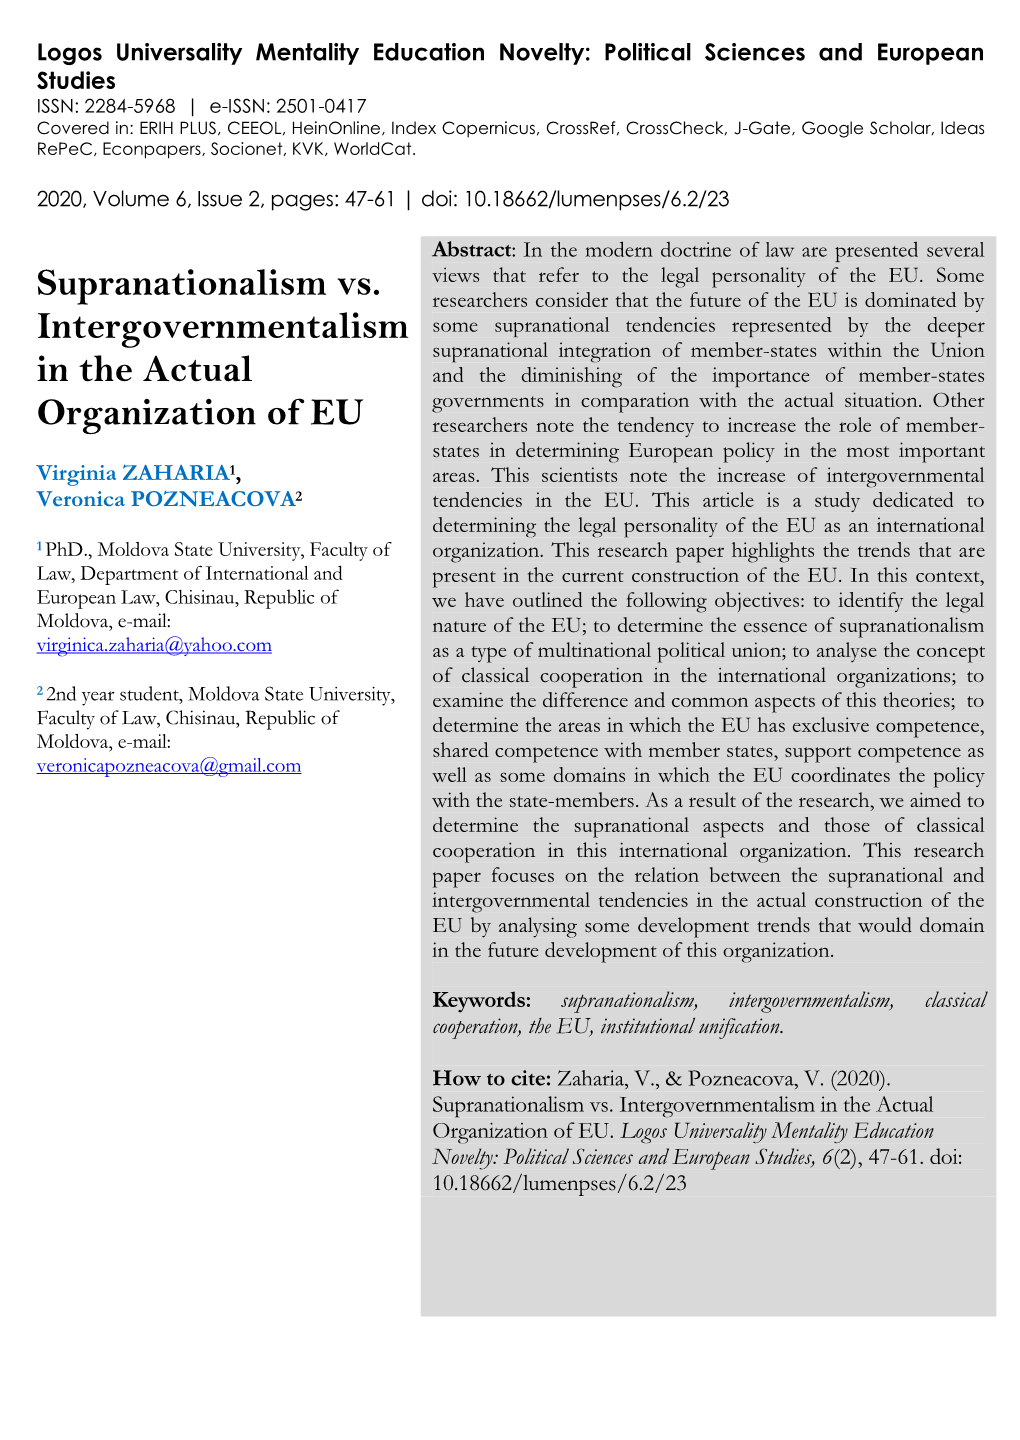 Supranationalism Vs. Intergovernmentalism in the Actual Organization of EU